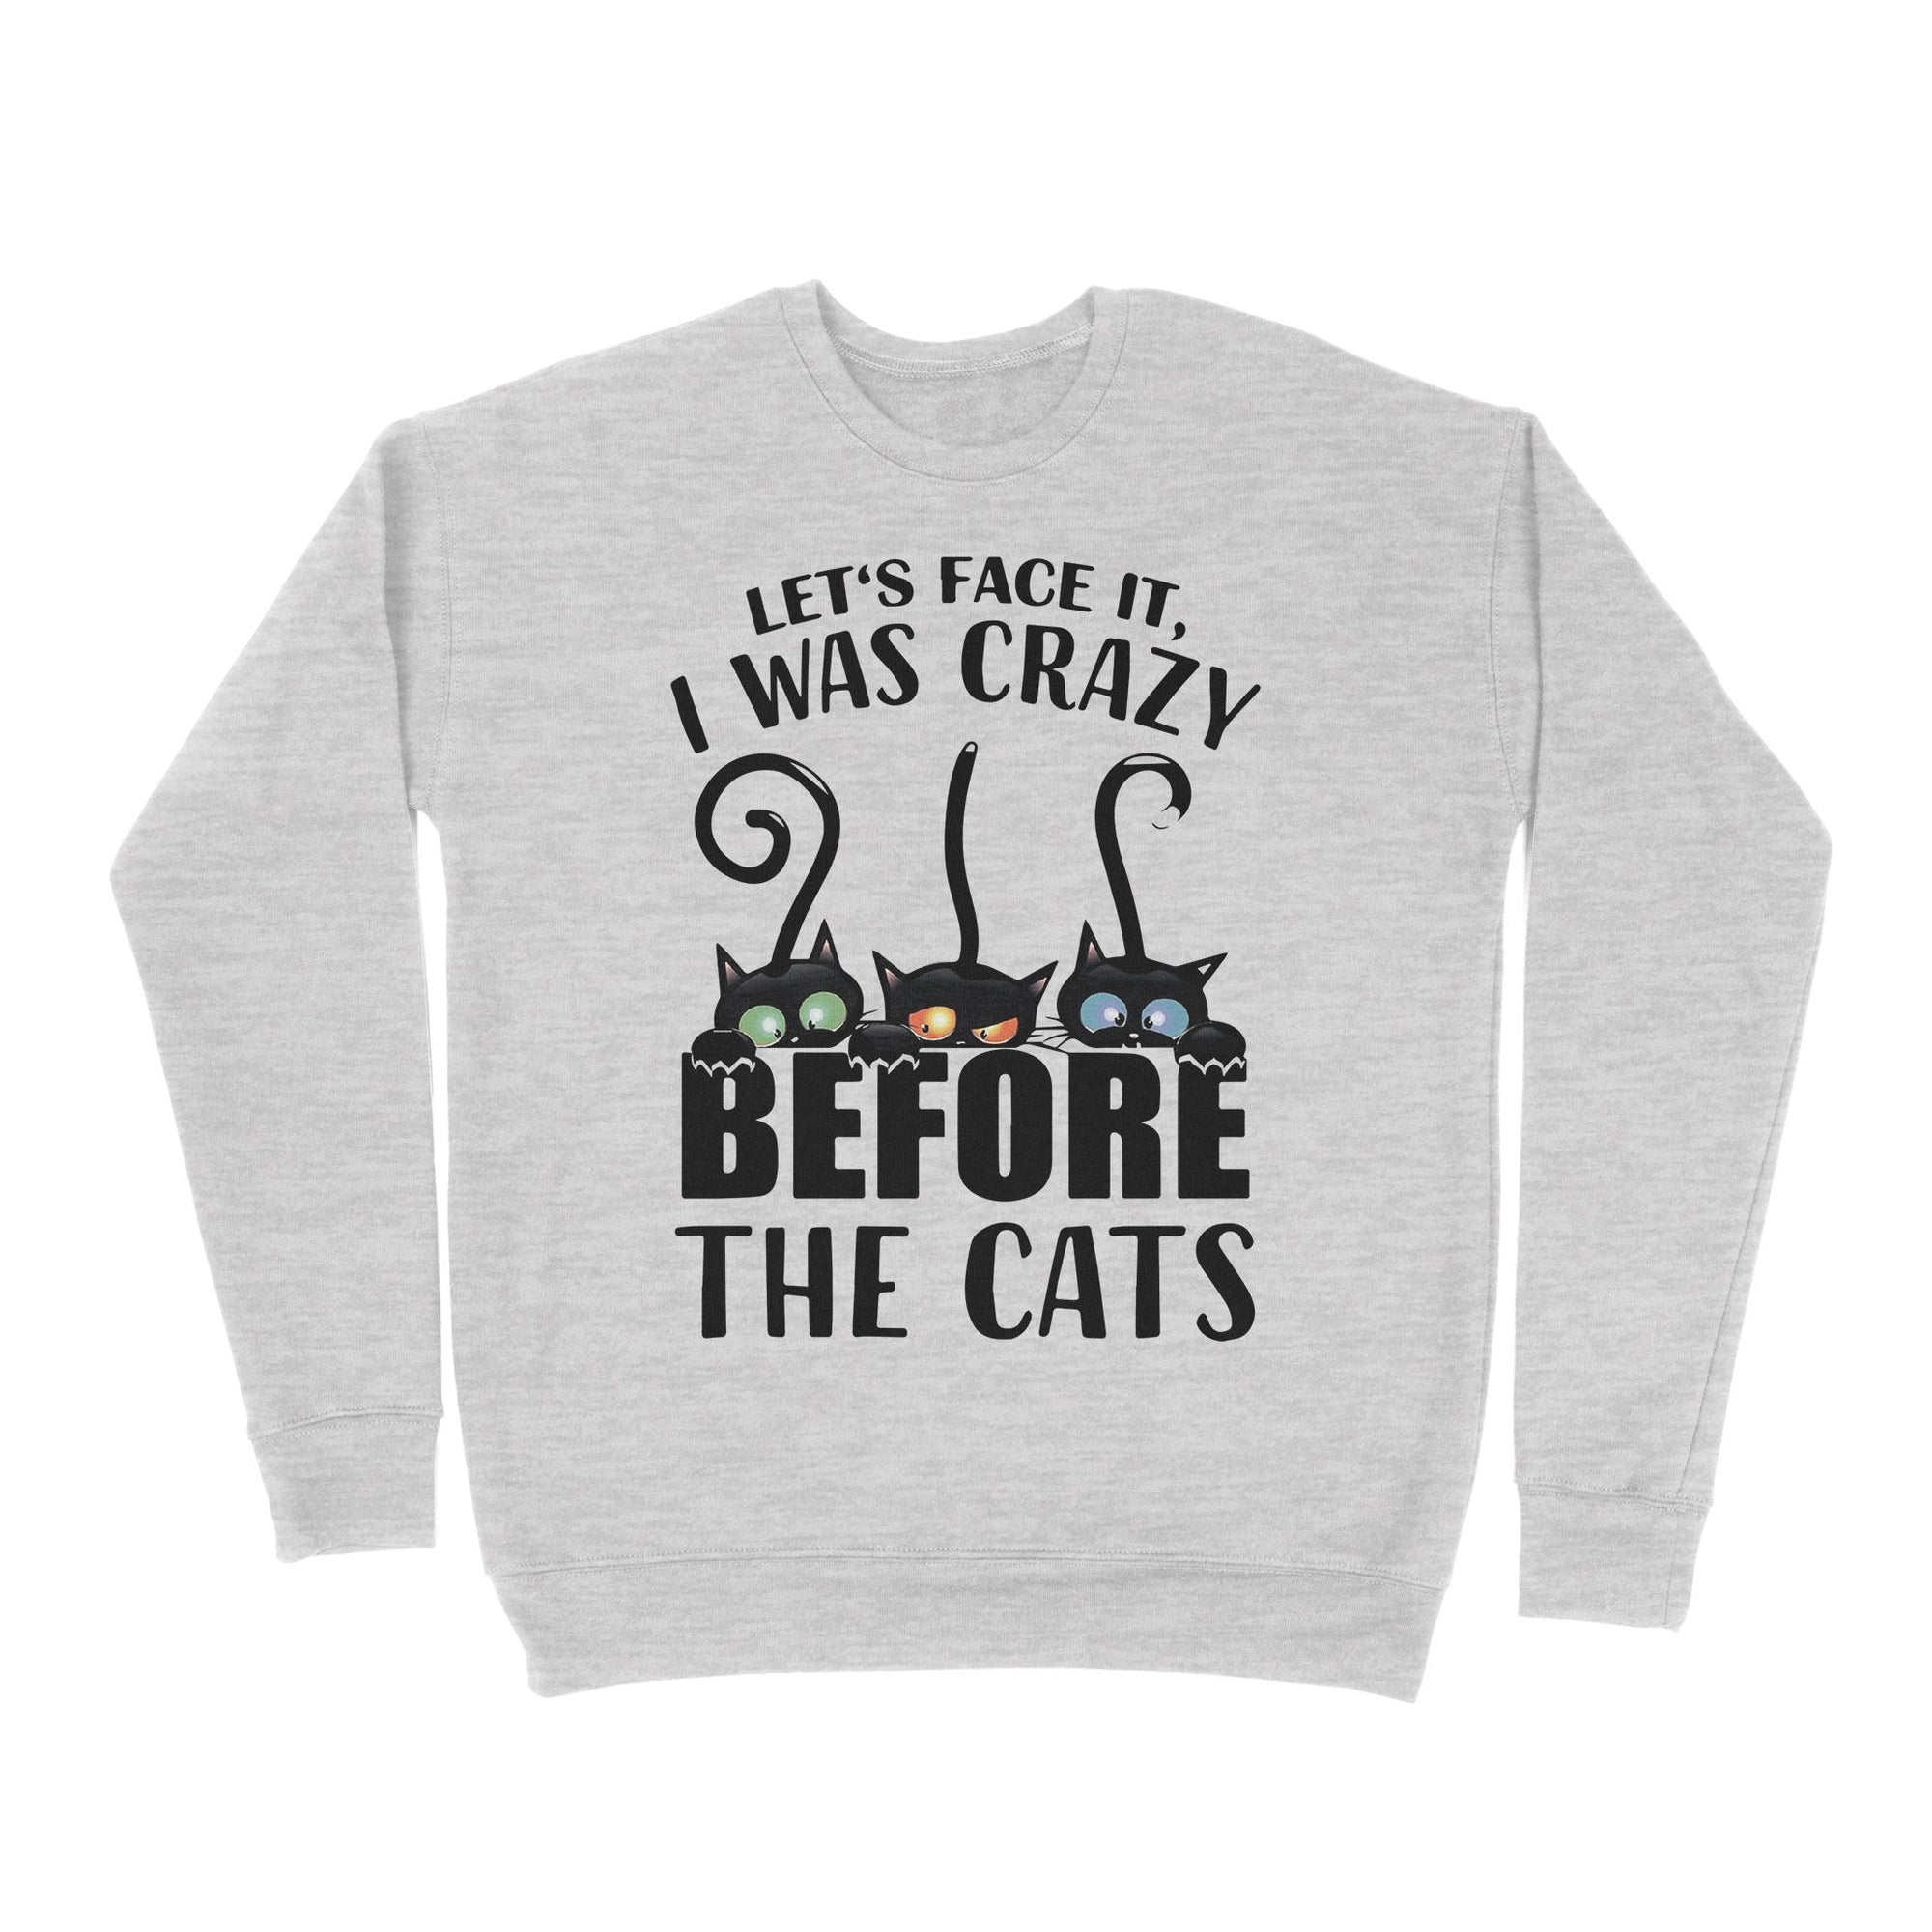 Let's Face It I Was Crazy Before The Cats - Premium Crew Neck Sweatshirt